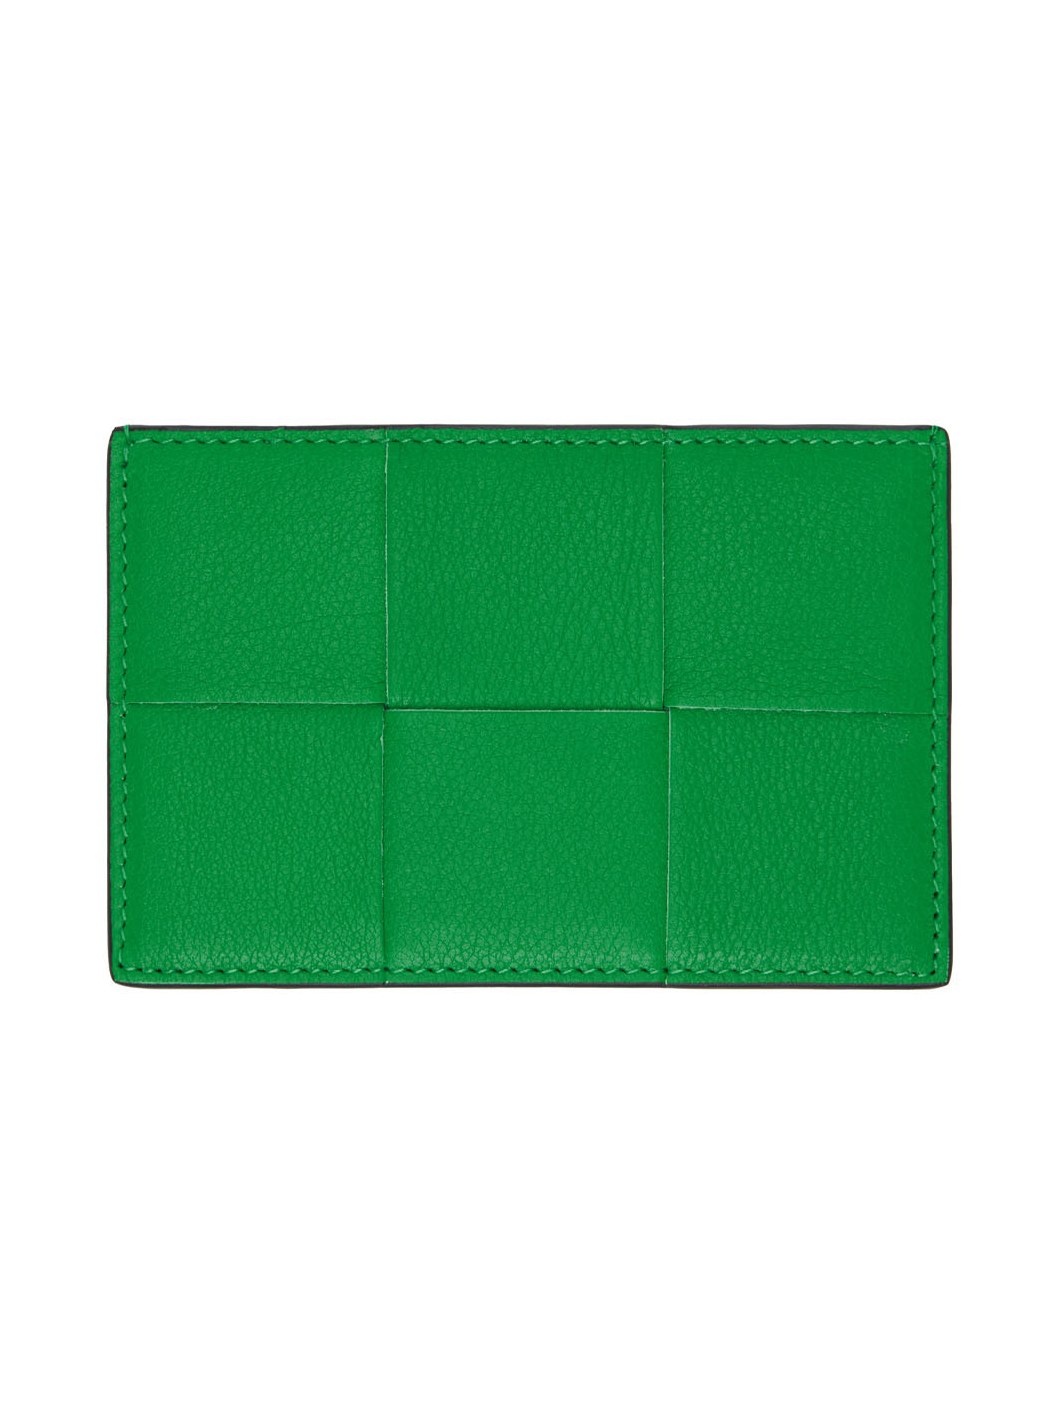 Green Credit Card Holder - 1